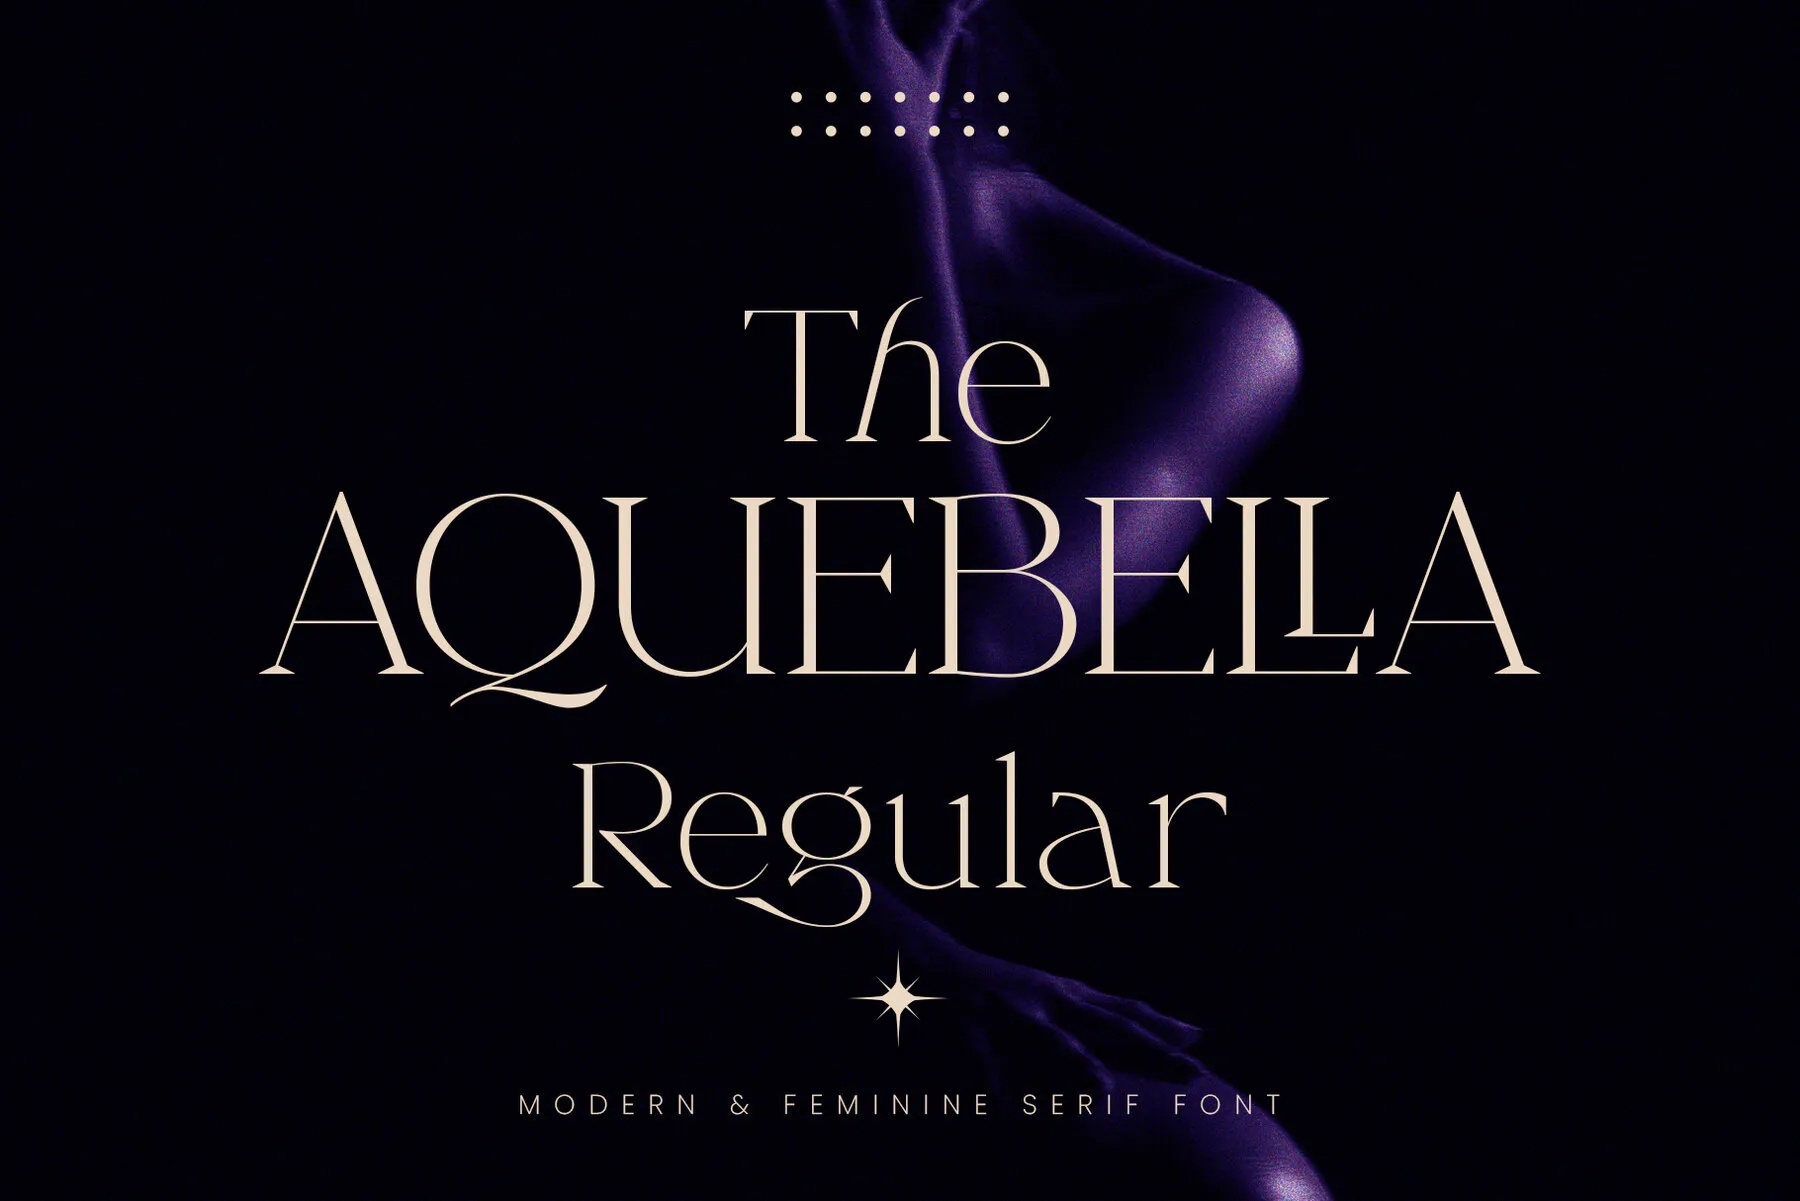 The Aquebella